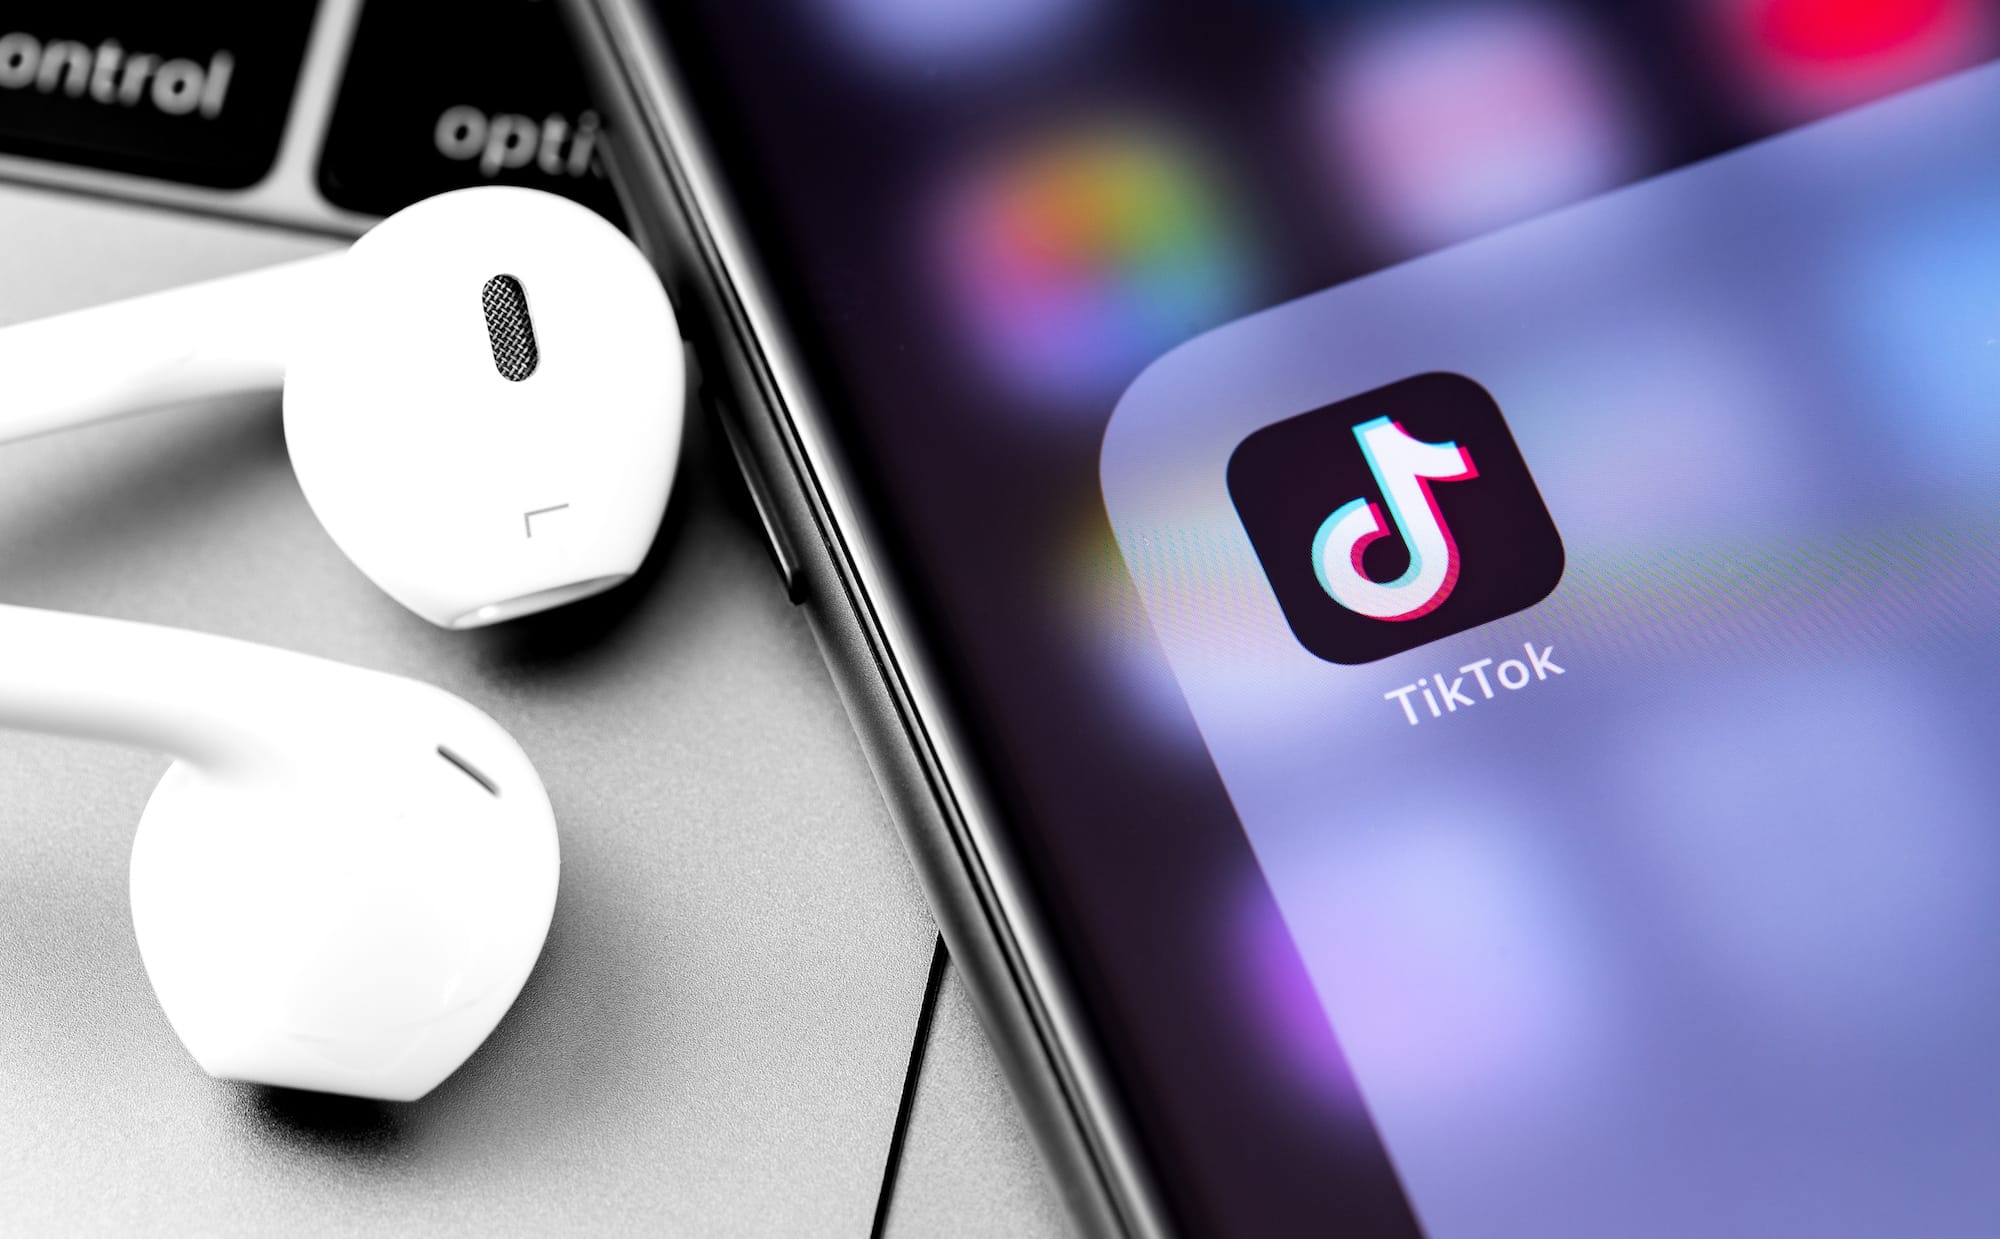 TikTok logo on the display iPhone with Earpods headphones closeup. TikTok is app to create and share videos